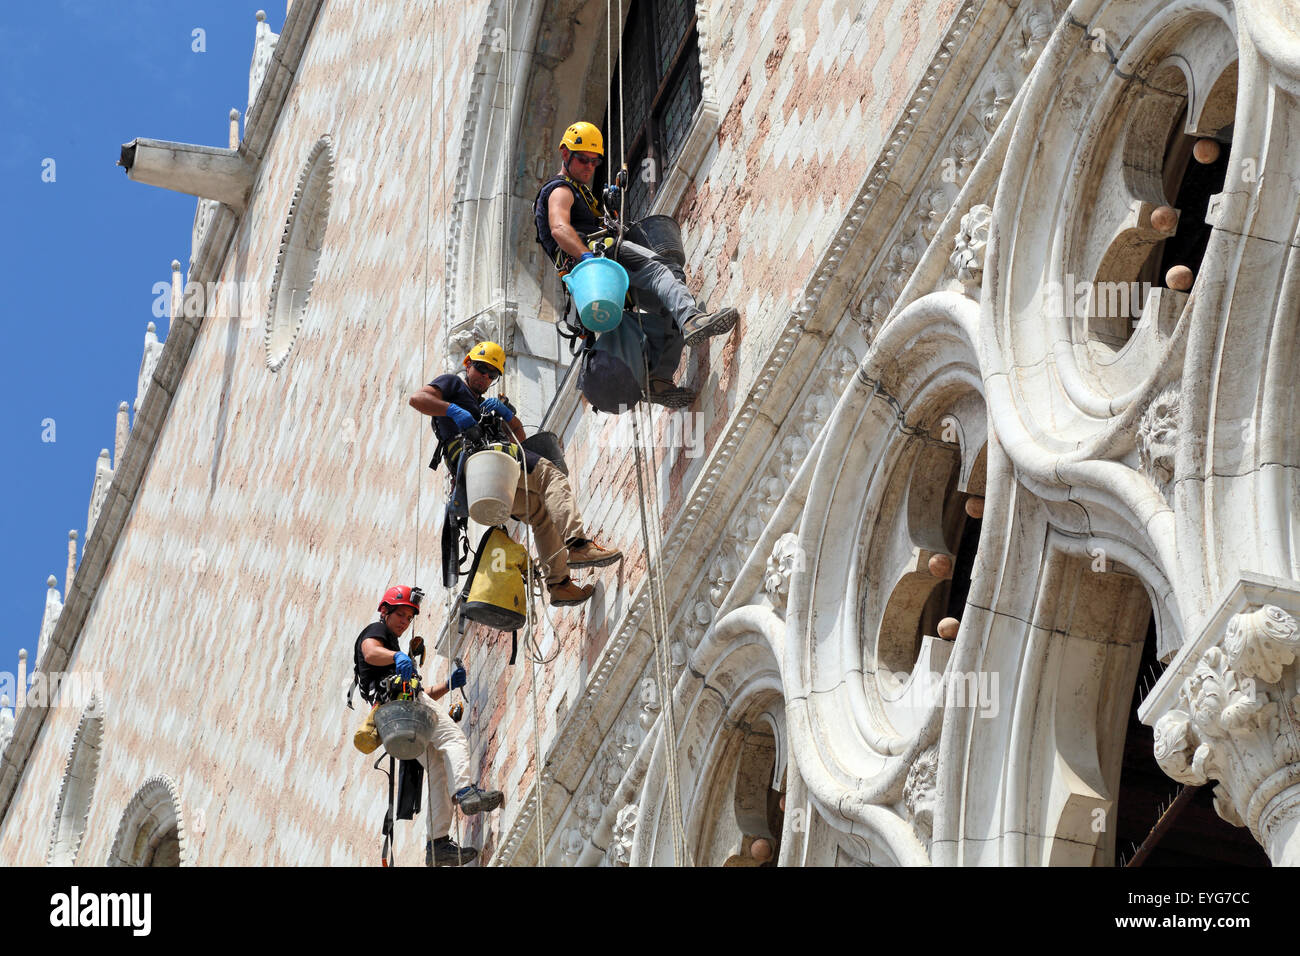 Restaurierungsarbeiten am Palazzo Ducale (Dogenpalast), Piazza San Marco, Venedig Stockfoto